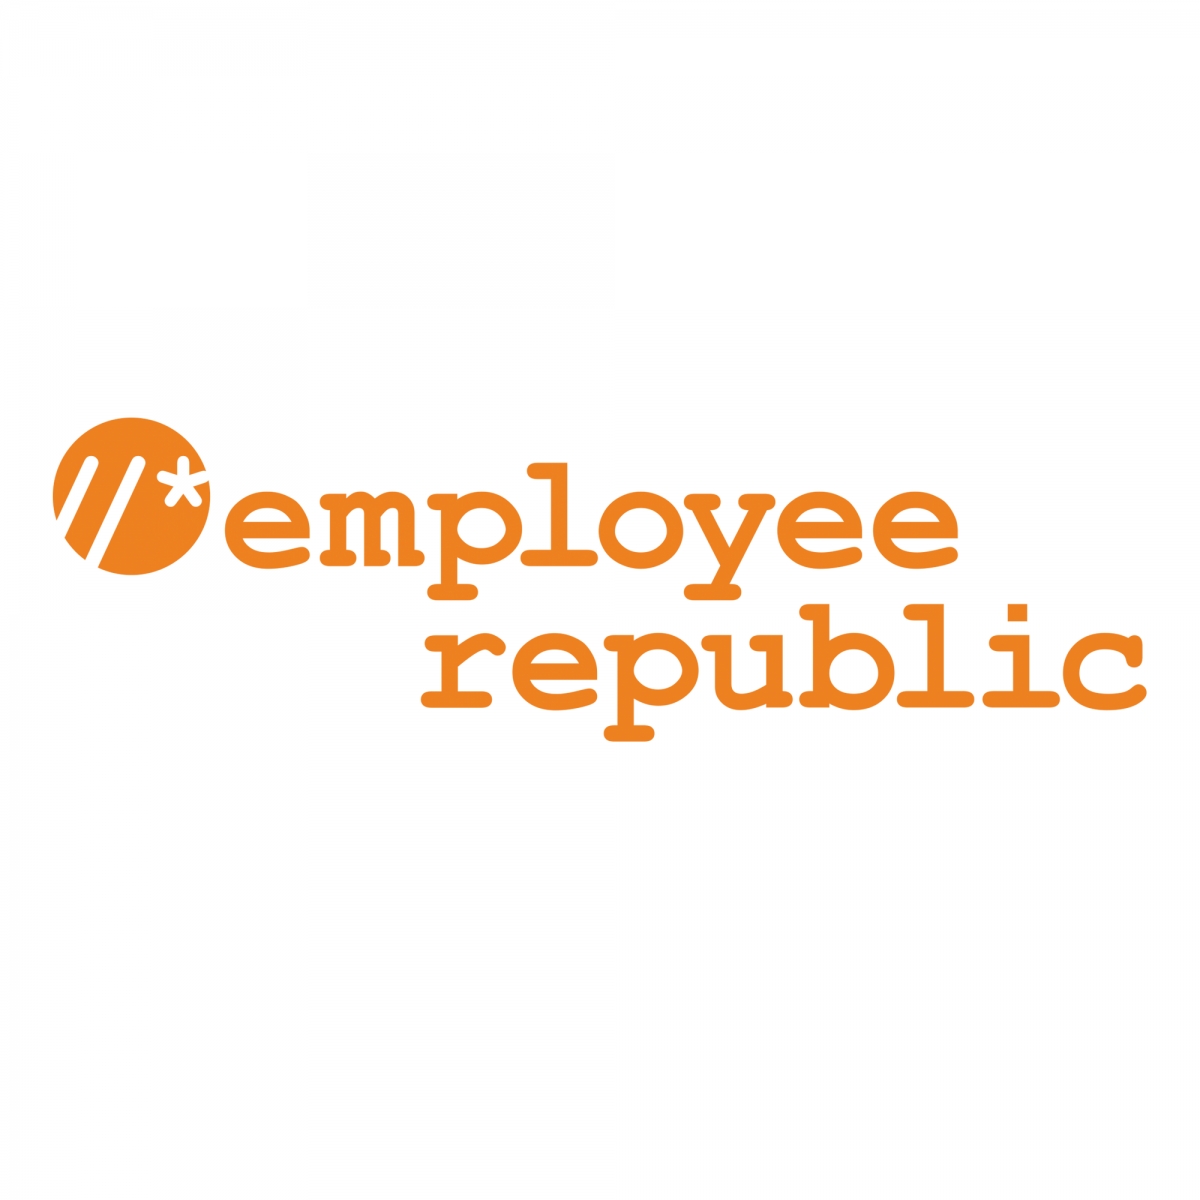 Employee Republic